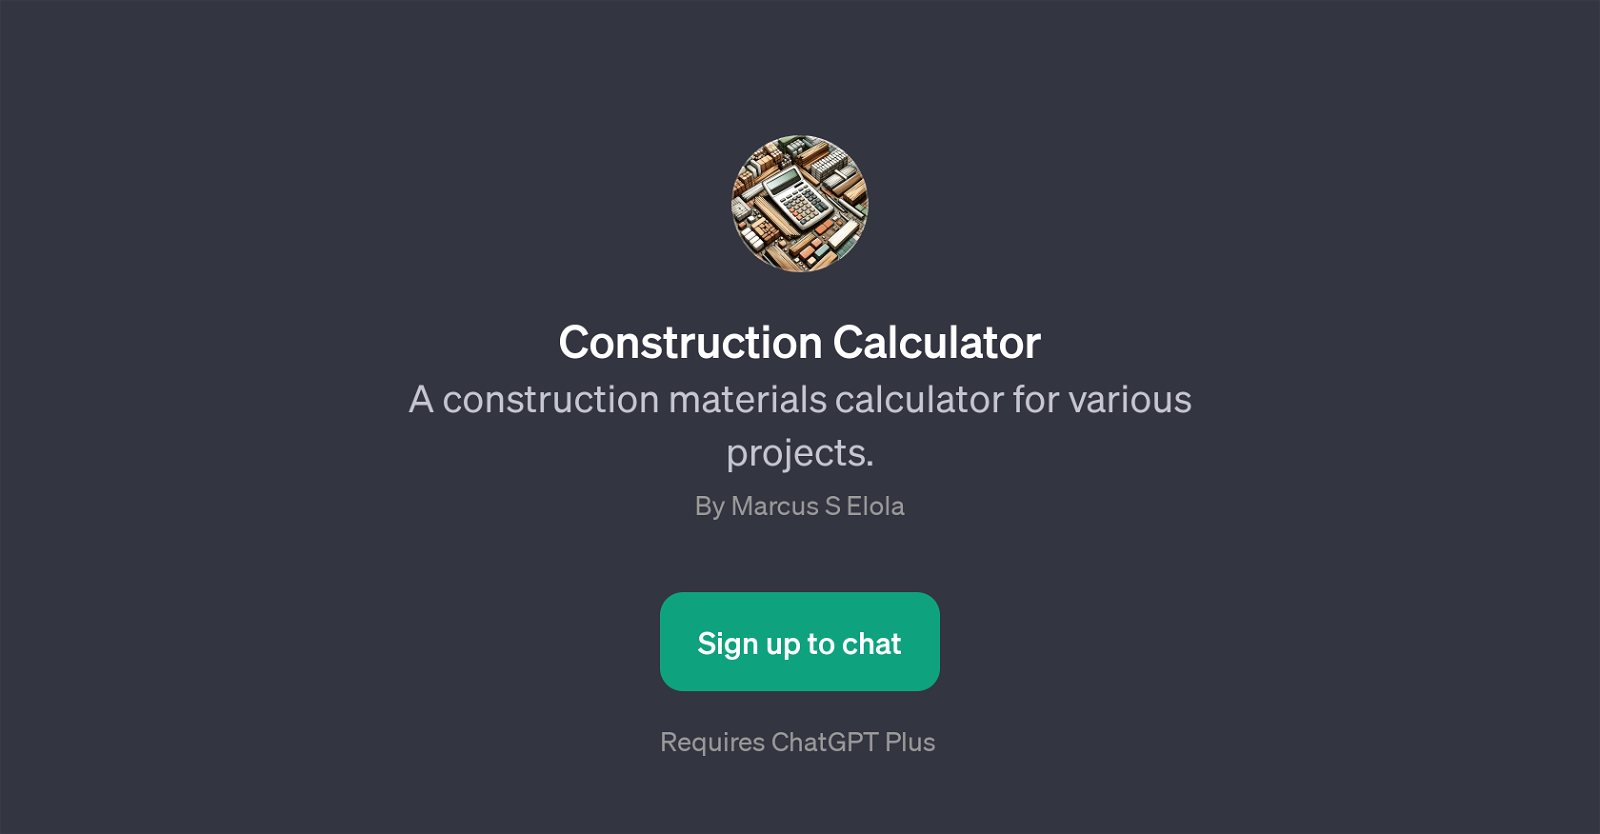 Construction Calculator website